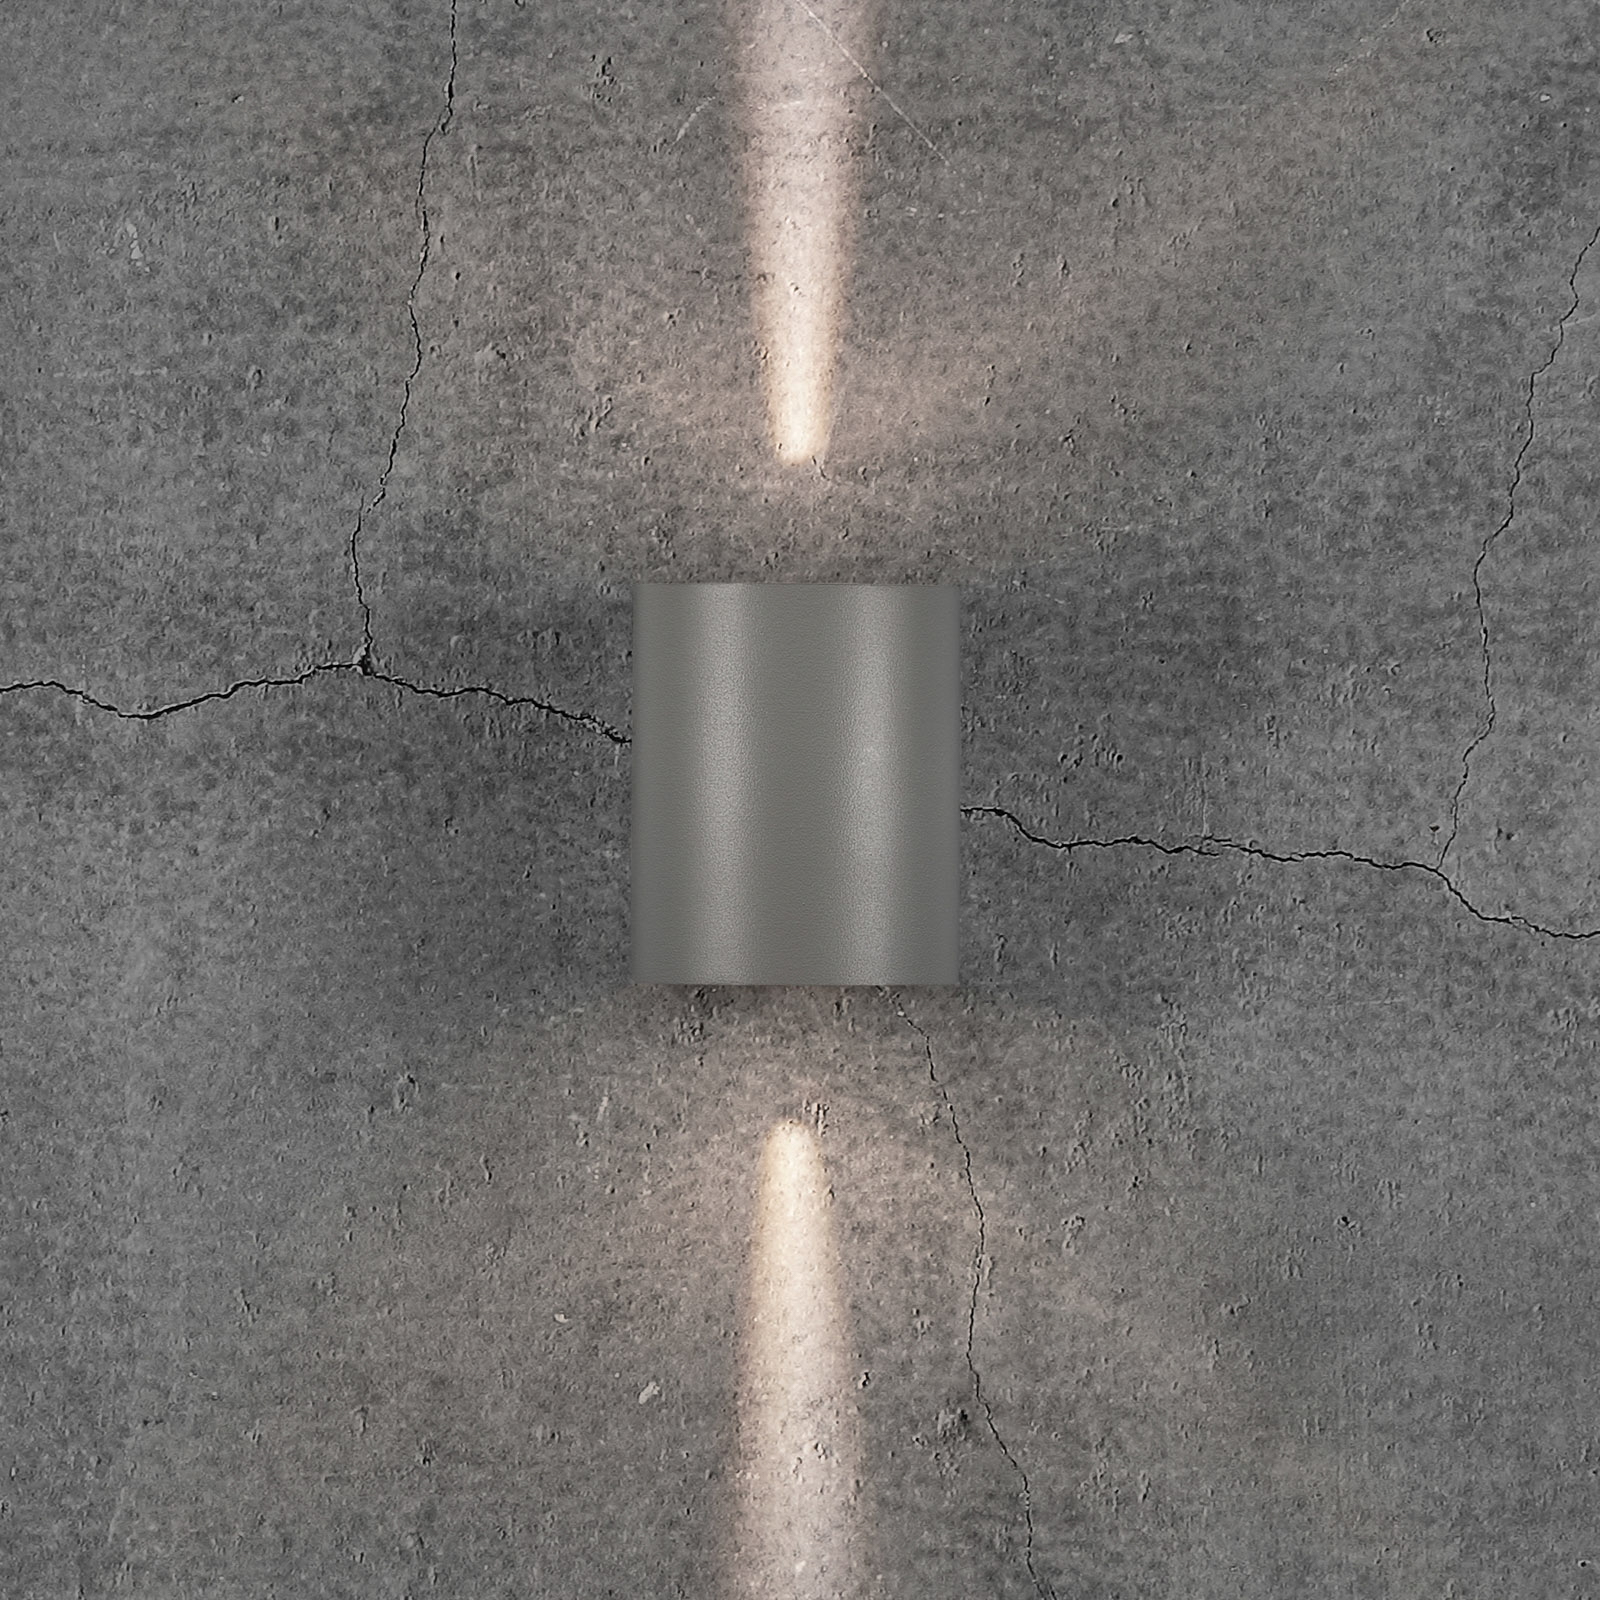 LED-Außenwandleuchte Canto 2, 10 cm, grau